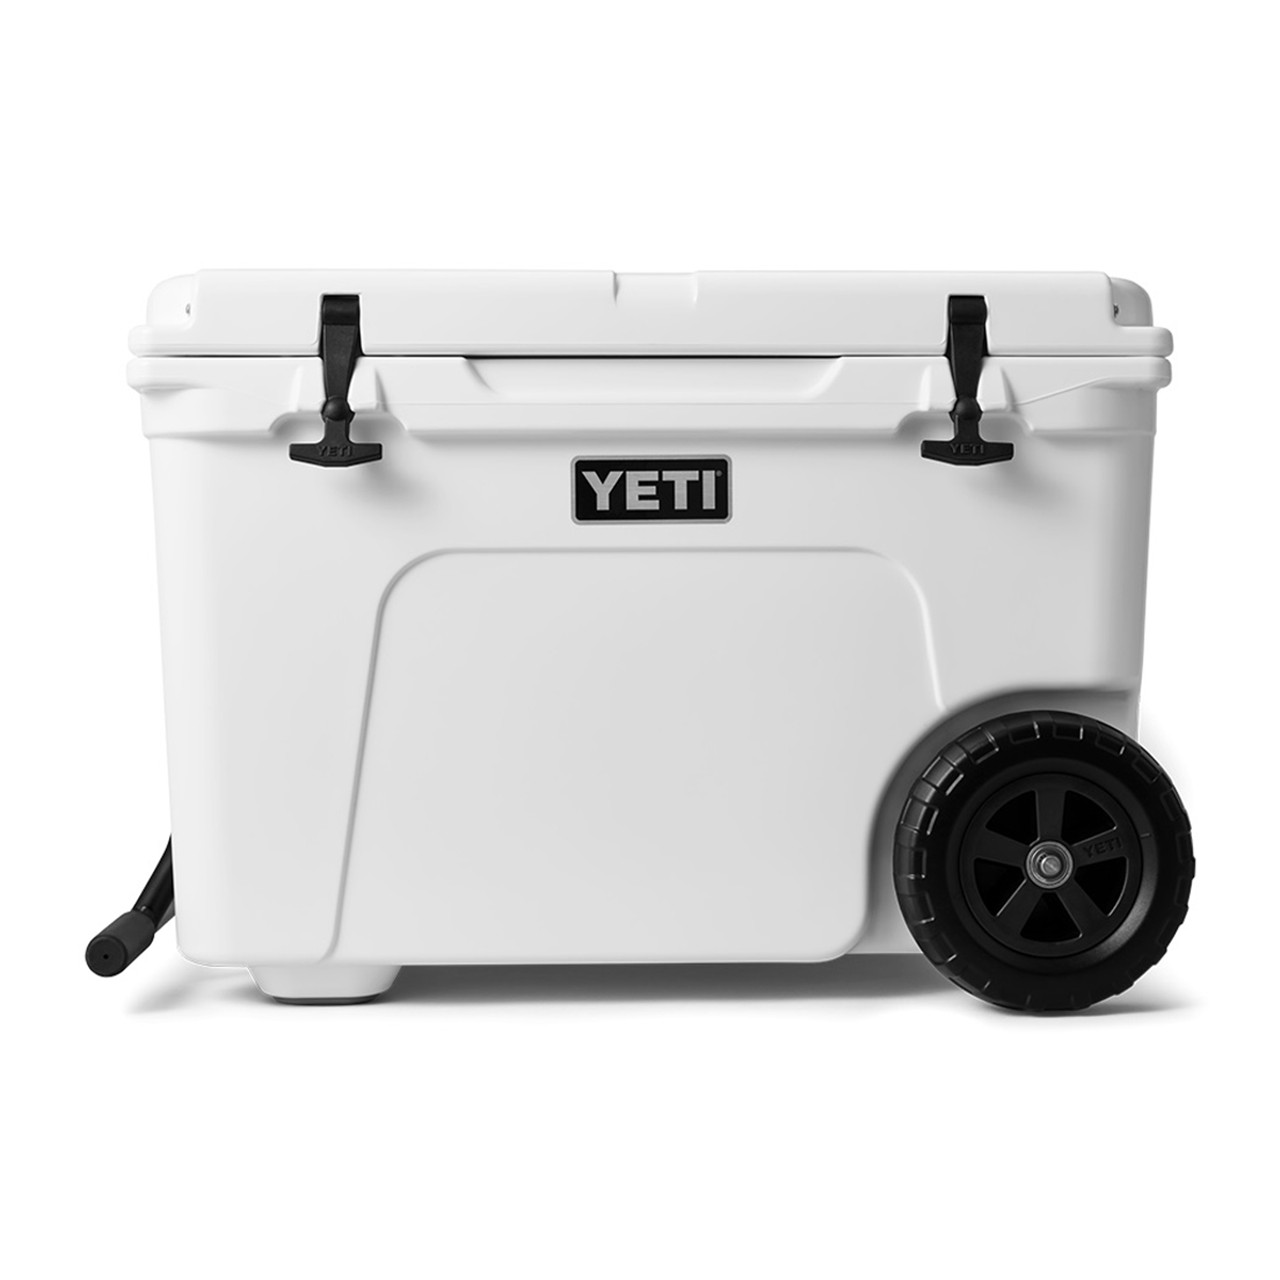  YETI Tundra 105 Cooler, Desert Tan : Sports & Outdoors